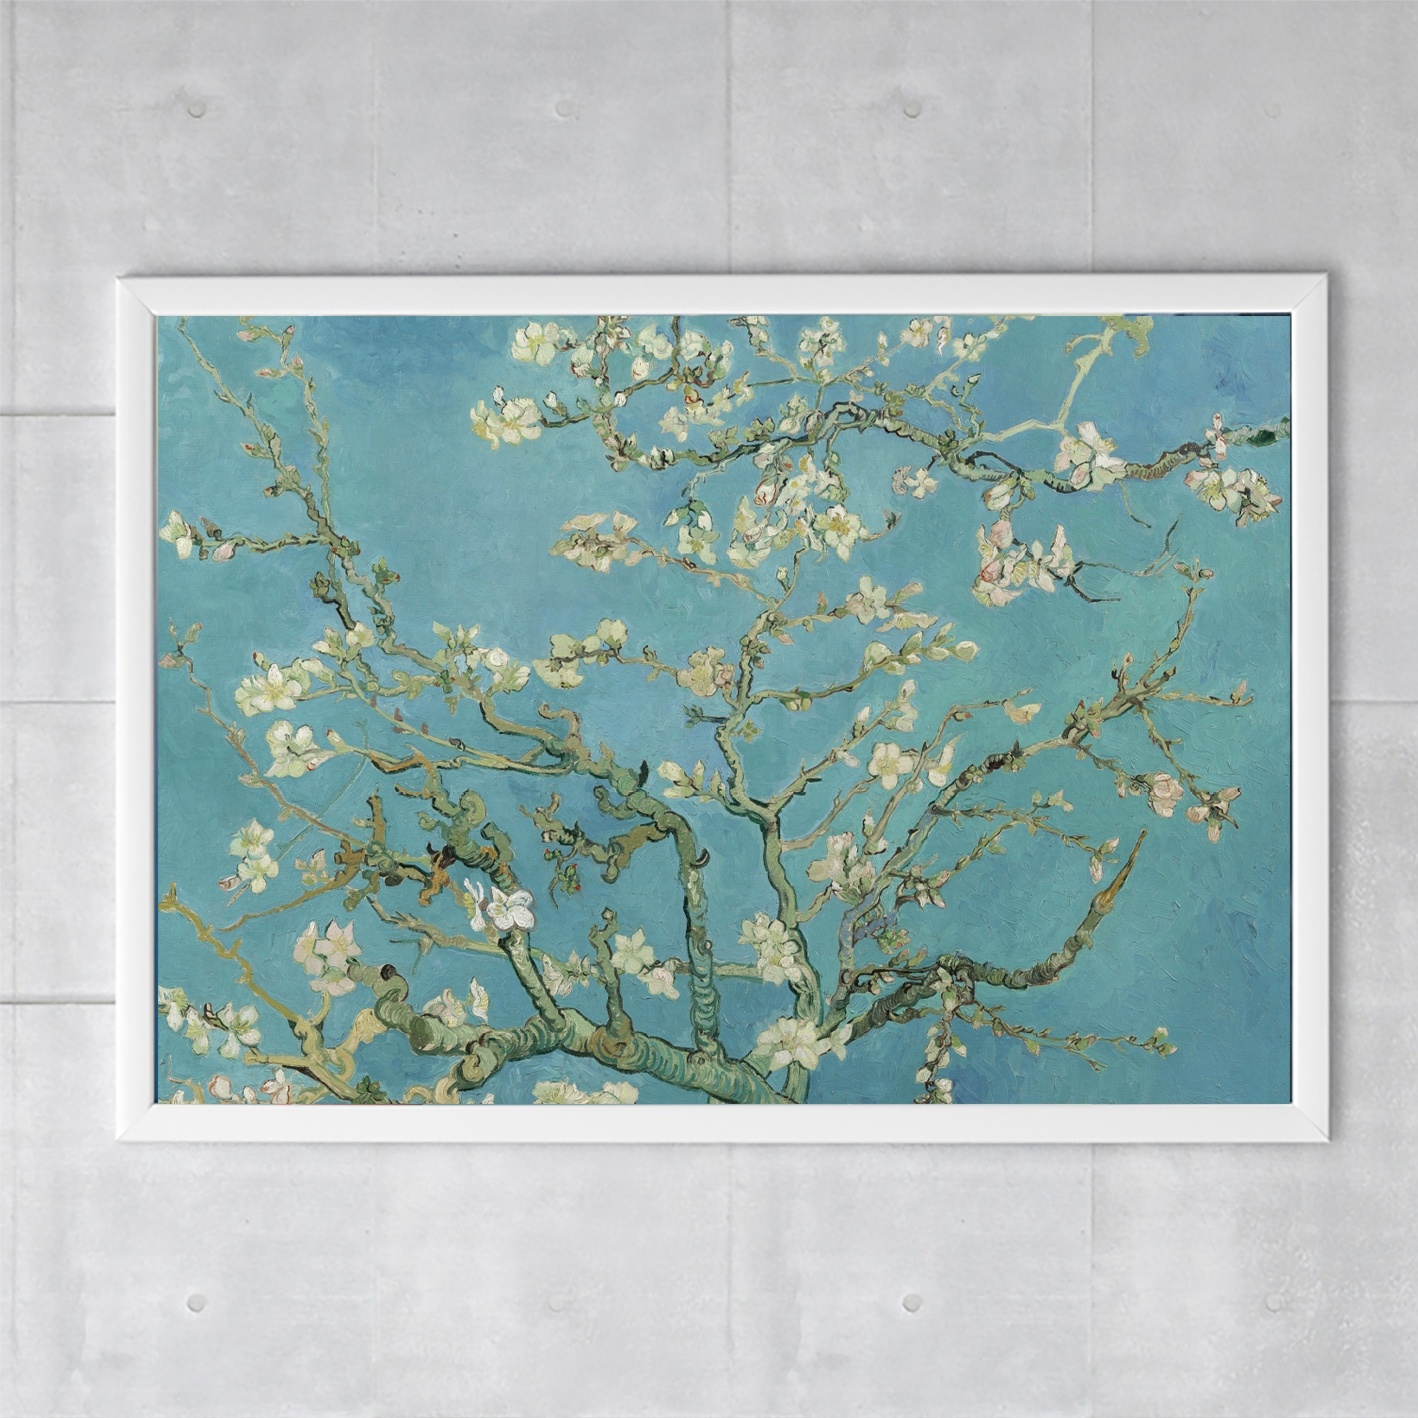 Plakat, Mandelblüte, Van Gogh | Museum Webshop - Museum-webshop